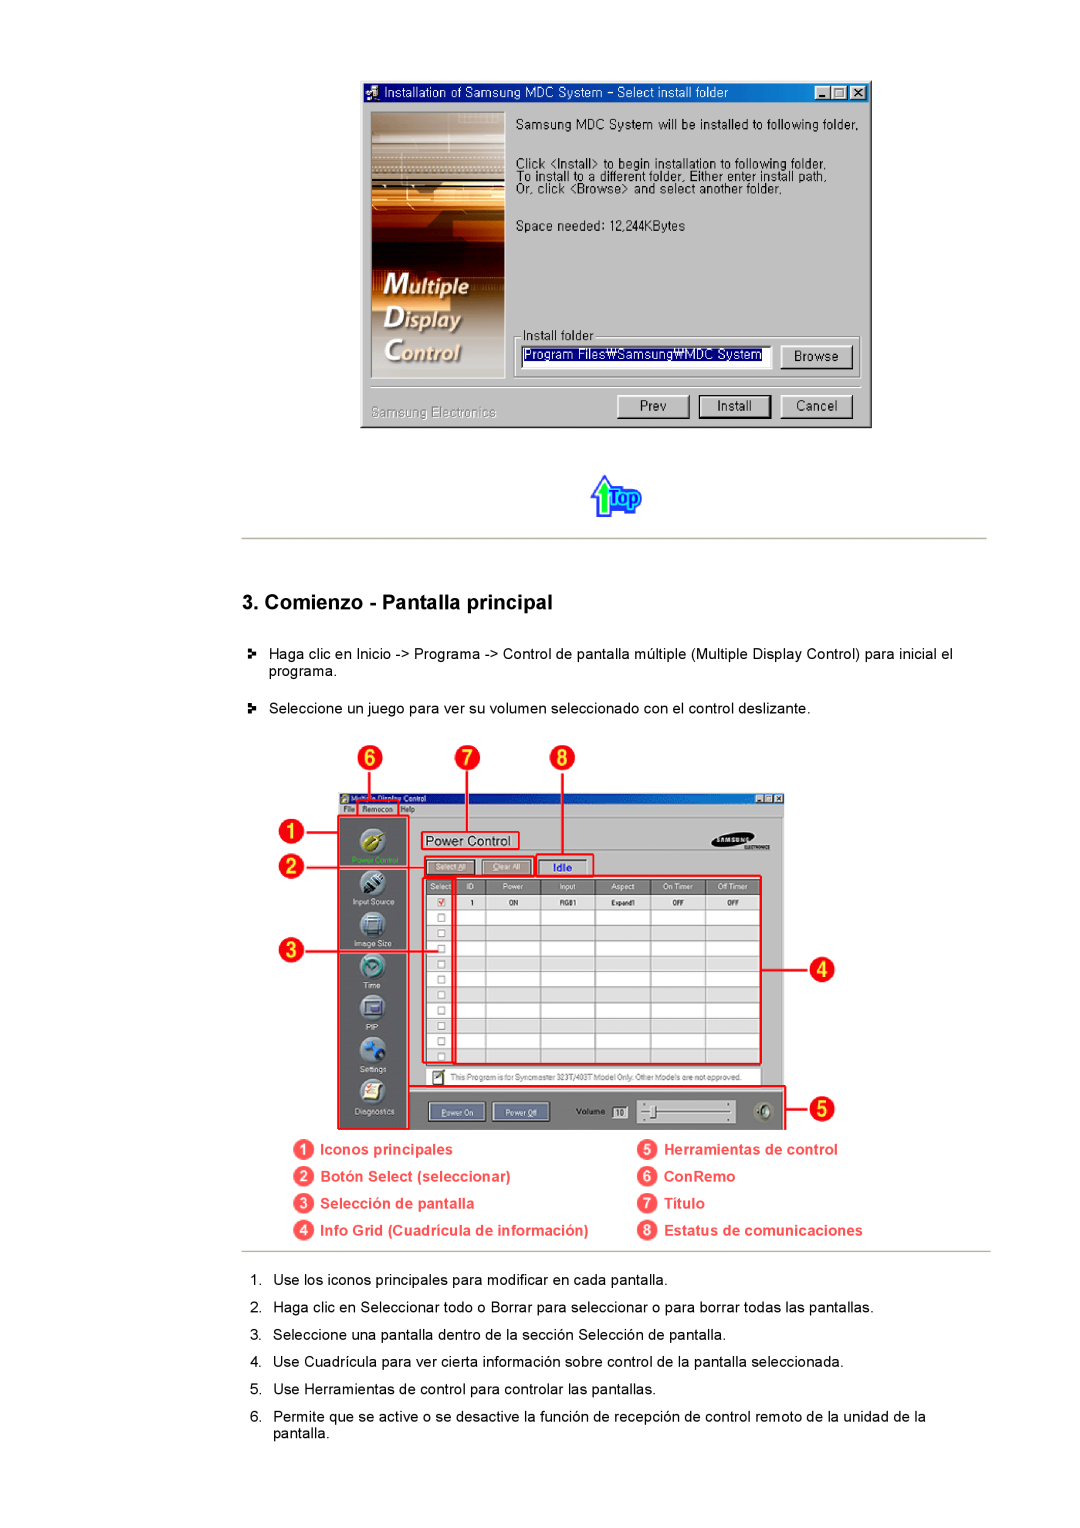 Samsung CK40BSNS/EDC Comienzo - Pantalla principal, Iconos principales, Herramientas de control, Botón Select seleccionar 